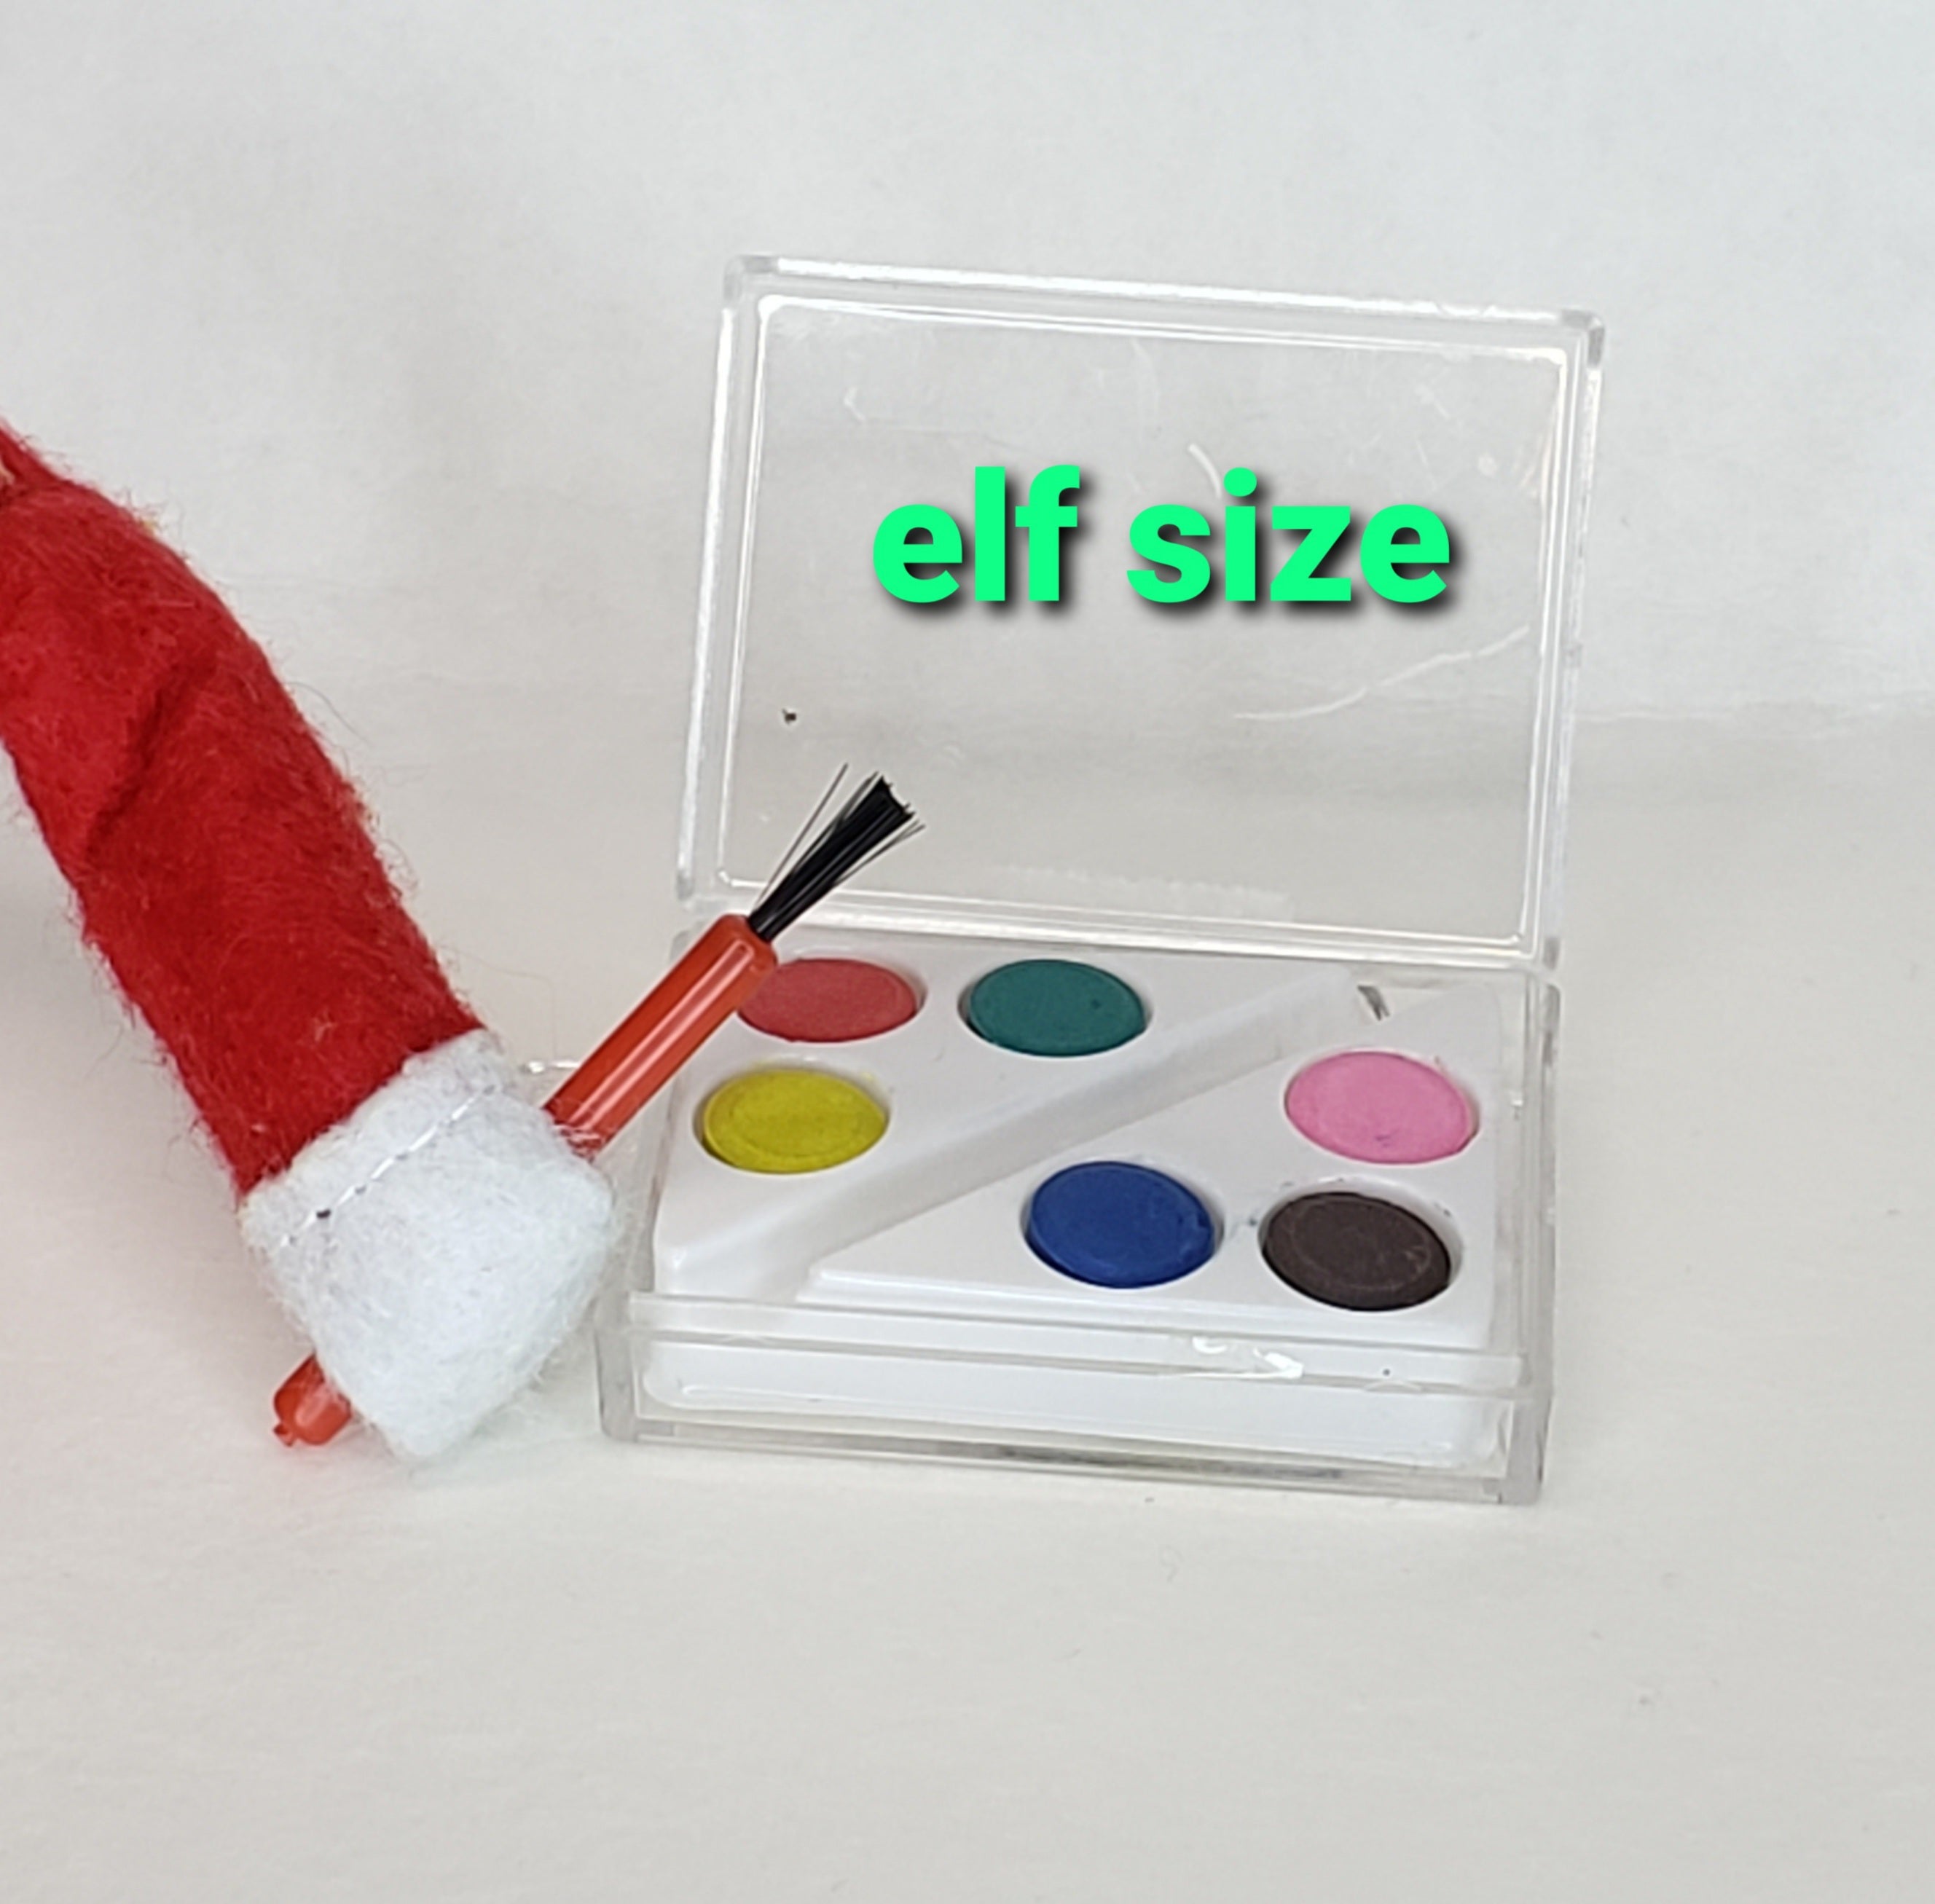 Elf Games: Reindeer nose game, Connect 3 & Paint Set